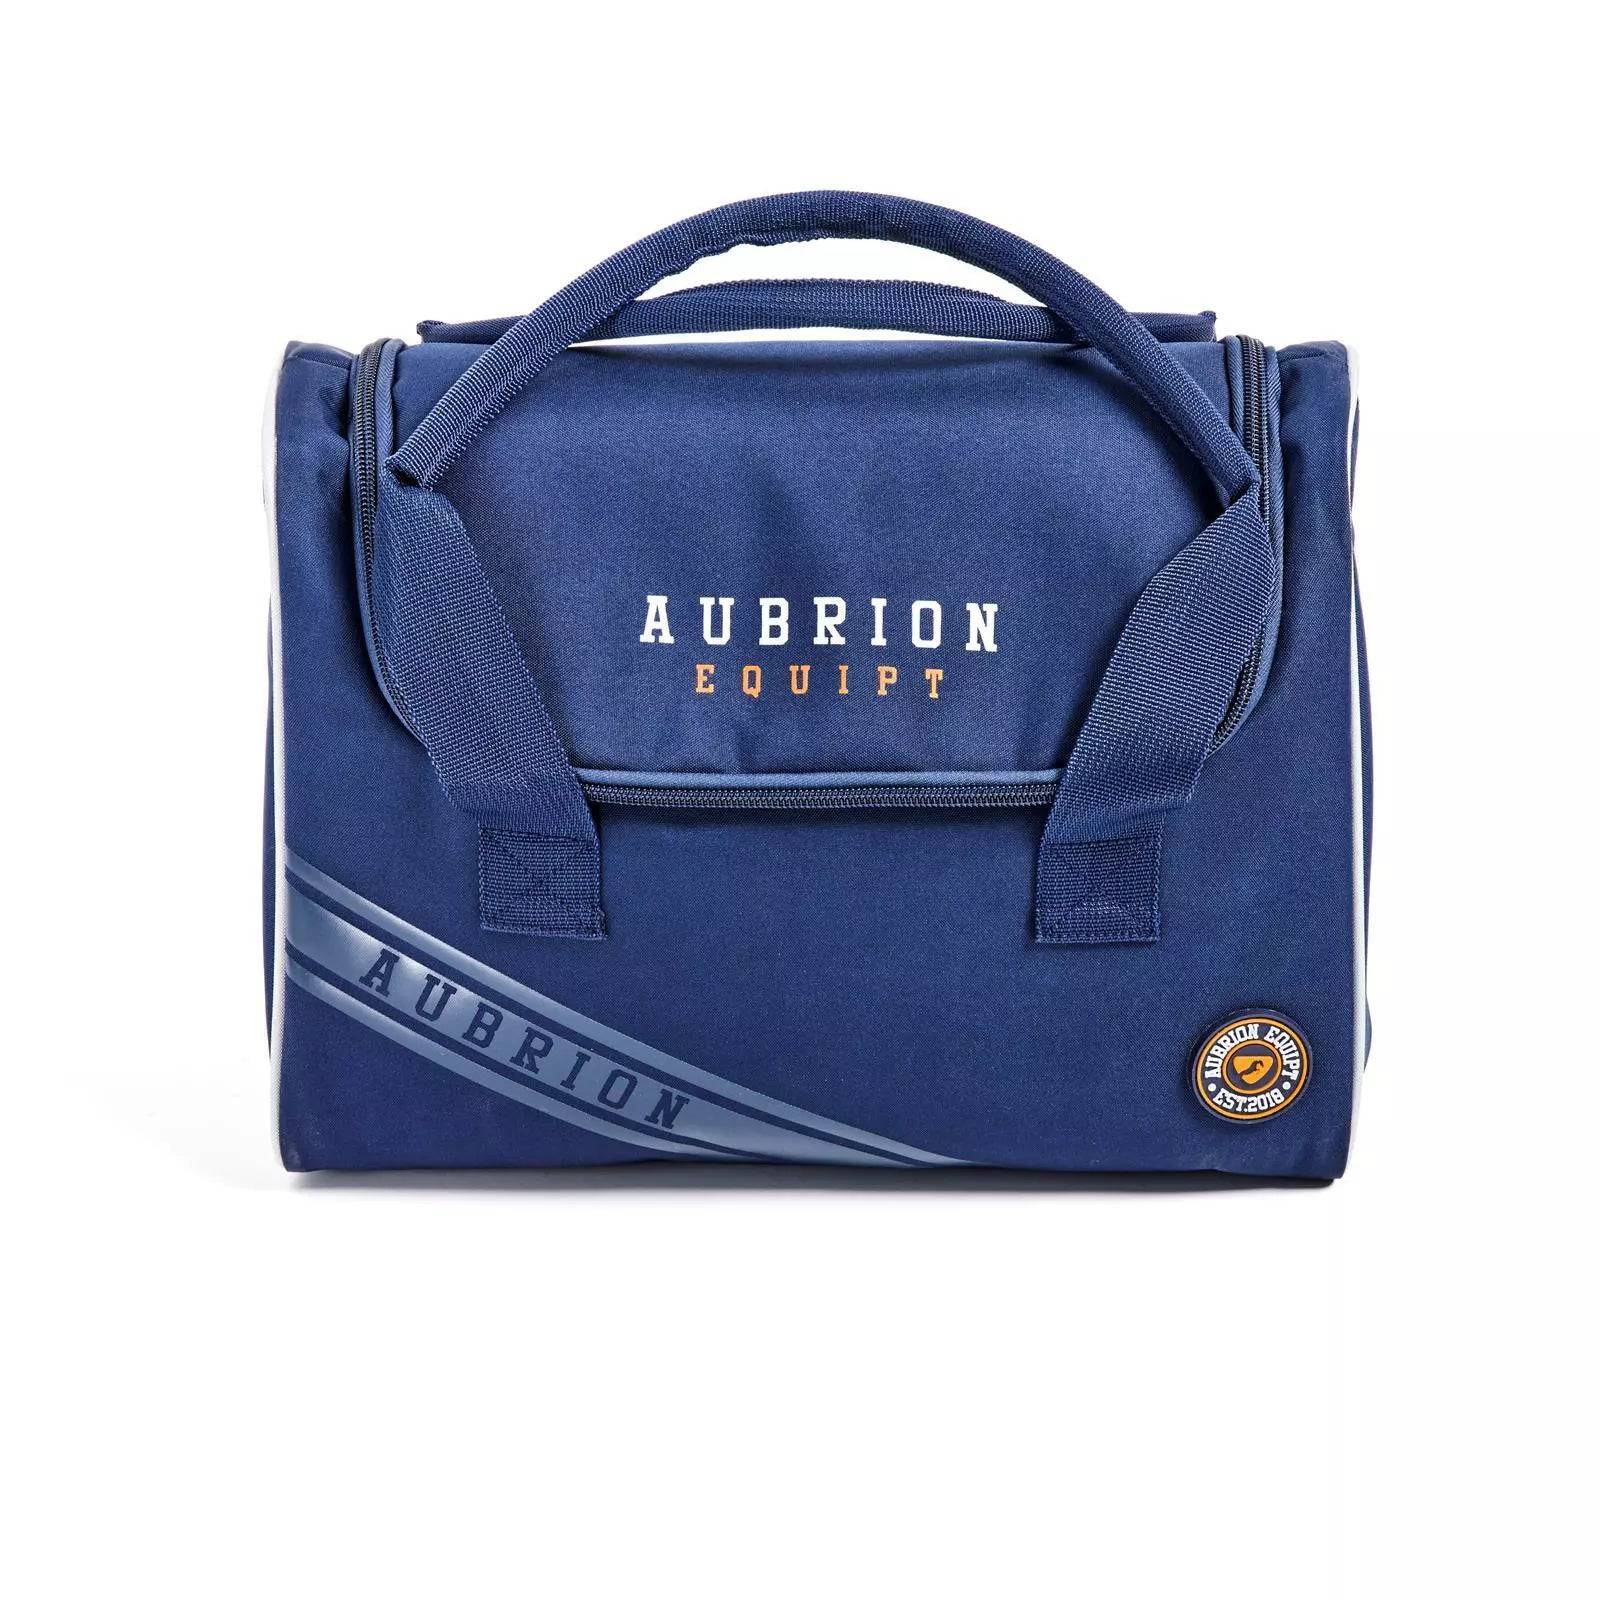 Aubrion Grooming Bag